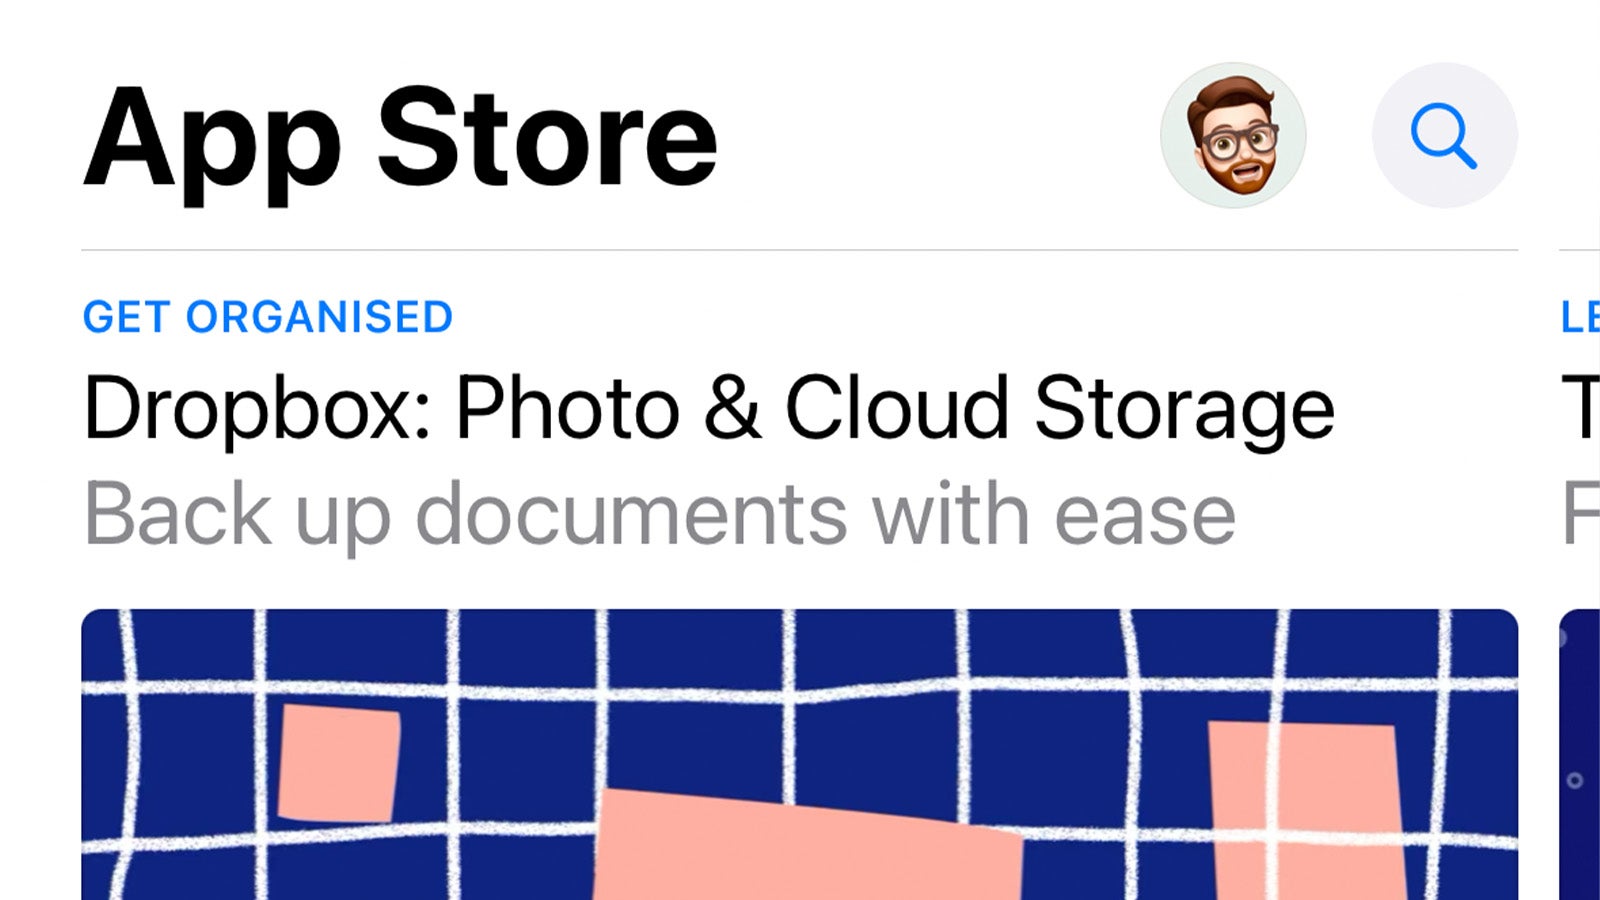 iMessage App Store interface